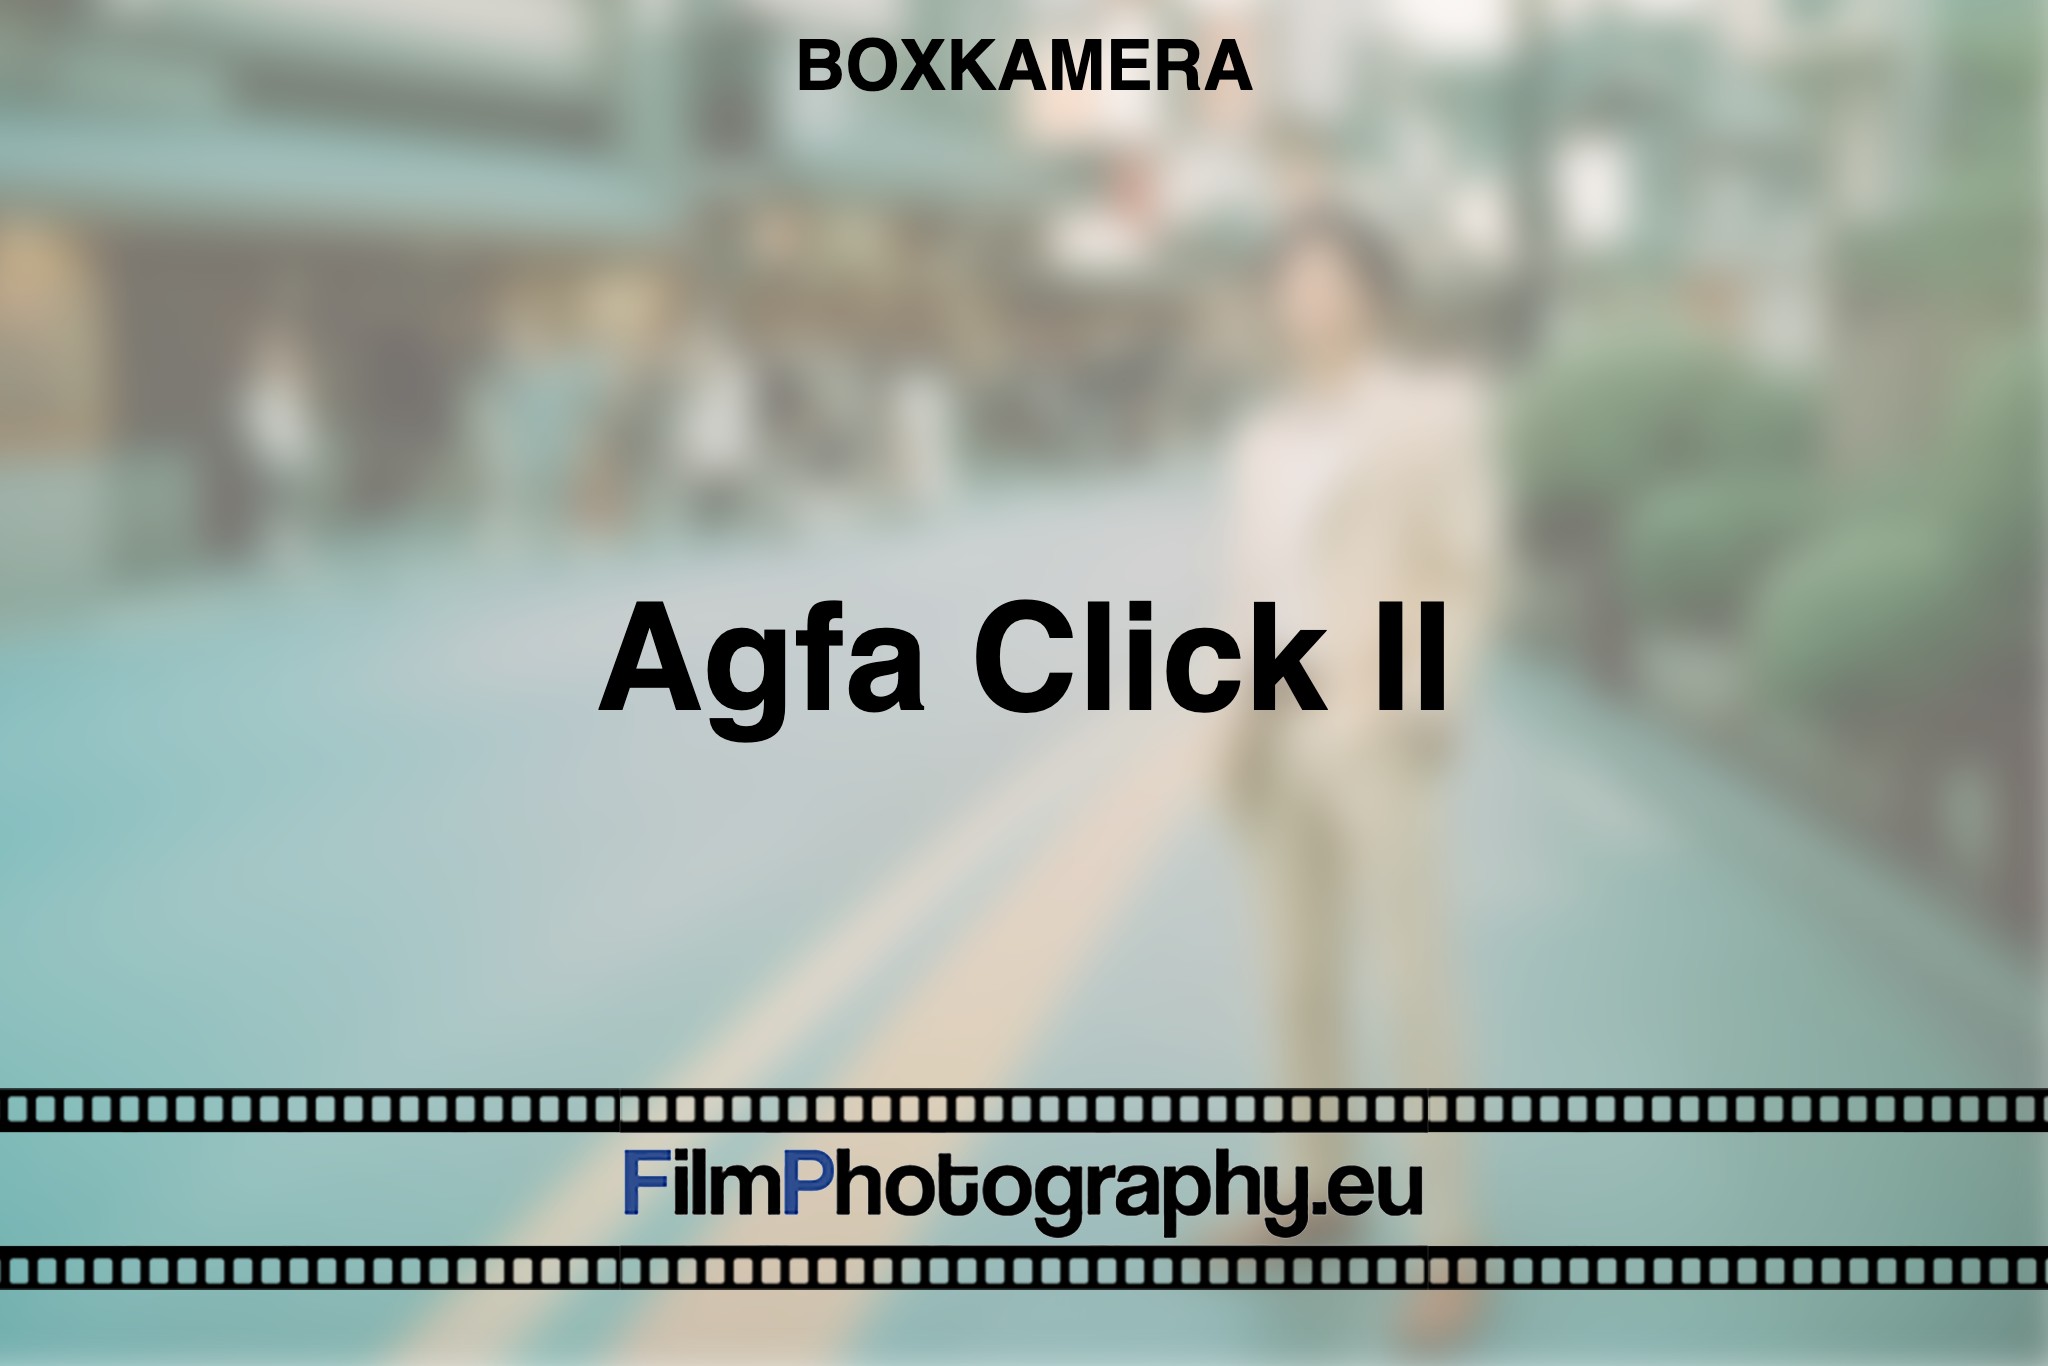 agfa-click-ii-boxkamera-bnv